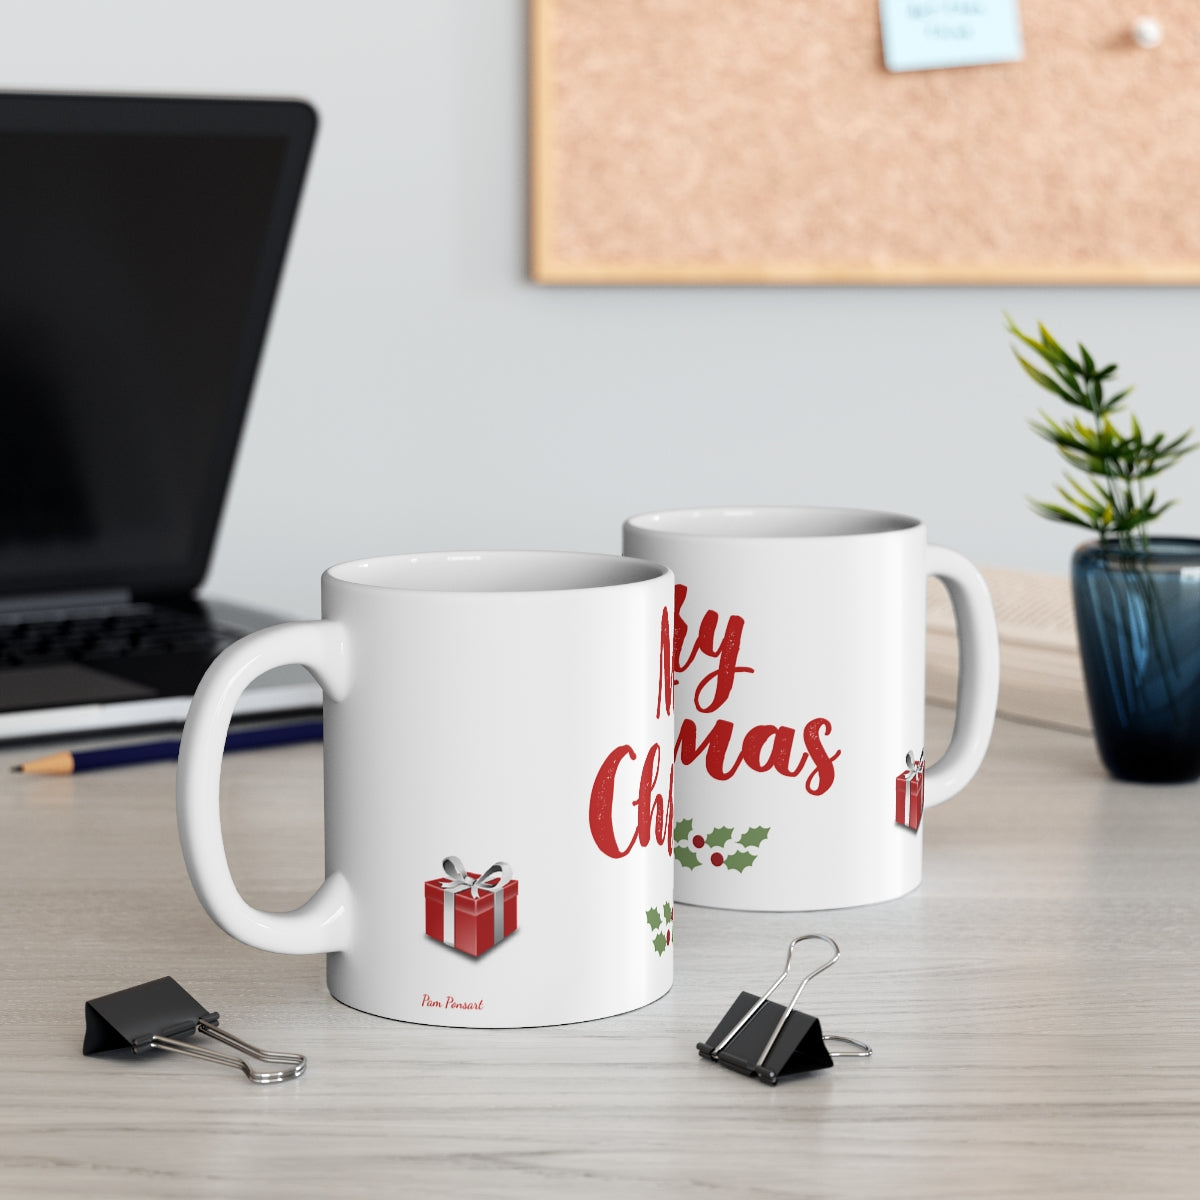 Holiday Merry-Christmas Mug: White; Ceramic; 11oz.; Textual